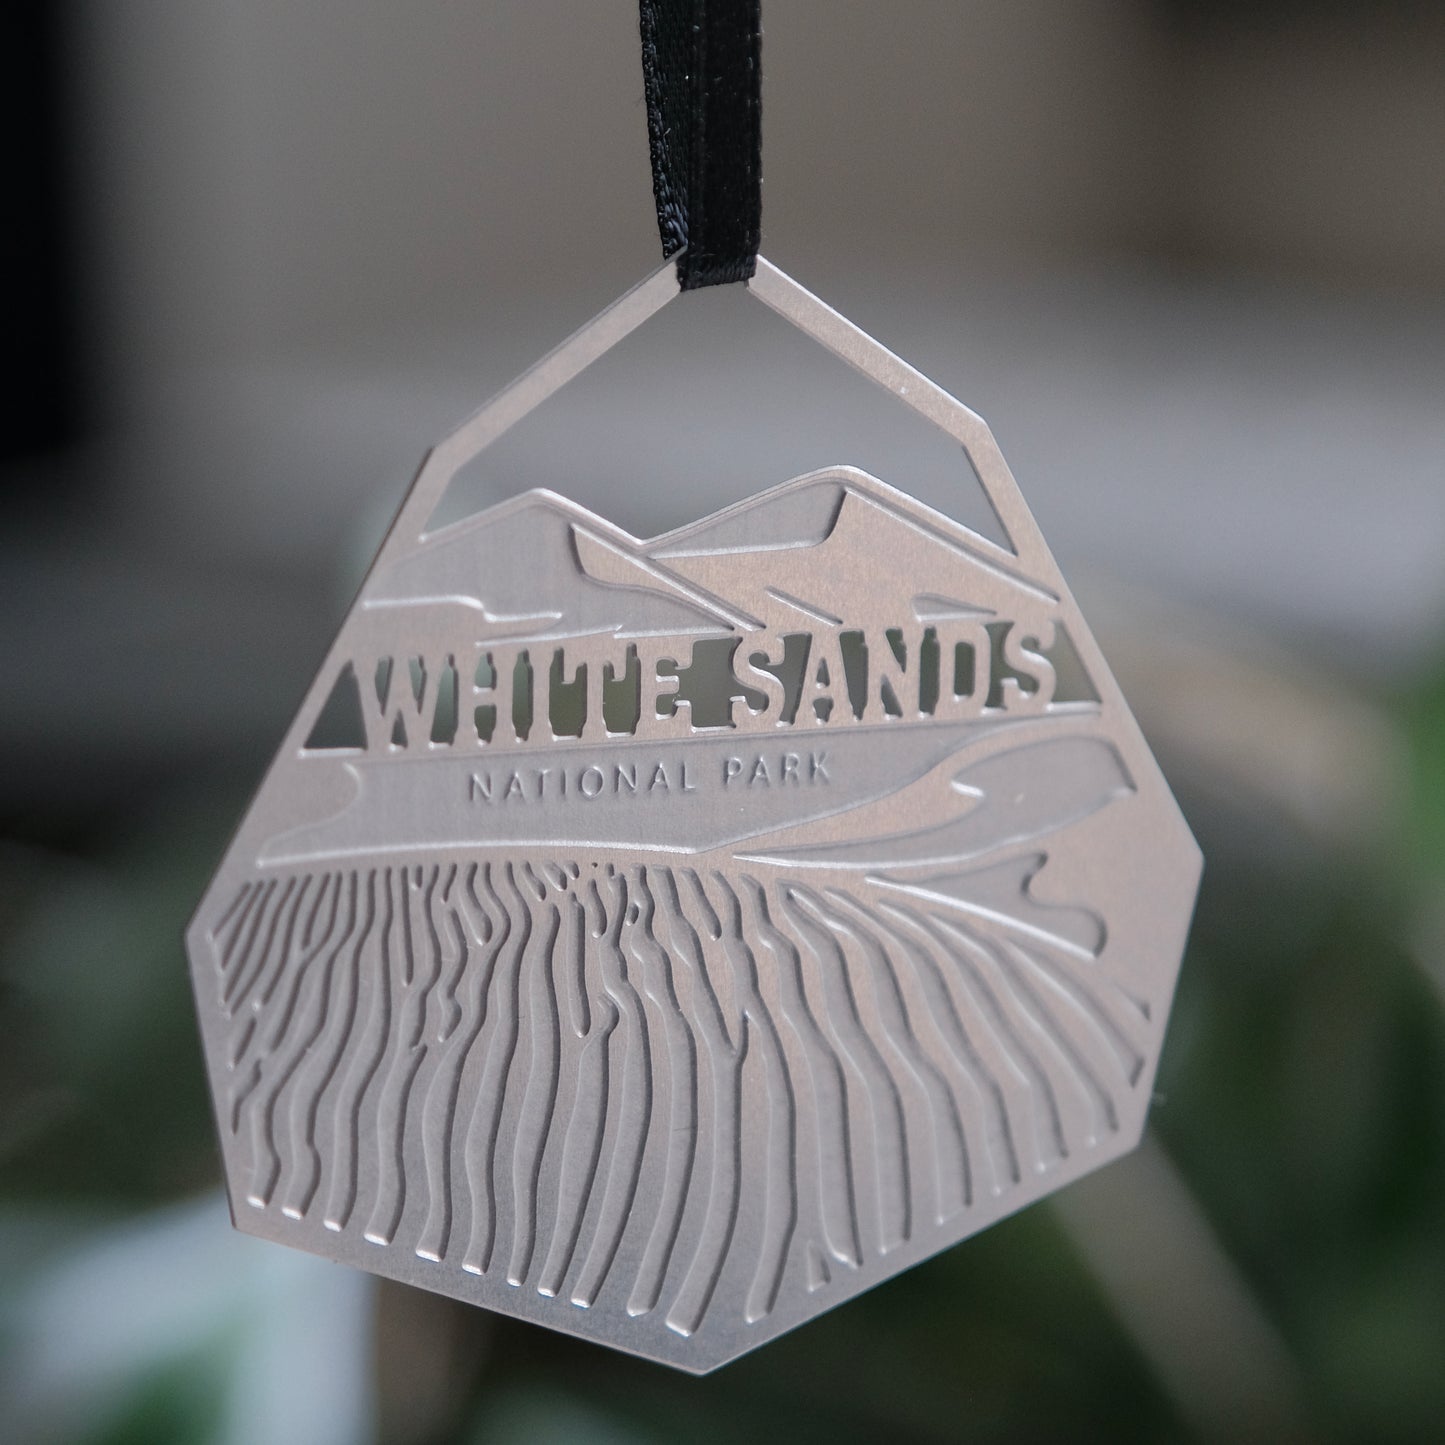 National Park Gift - White Sands National Park Ornament